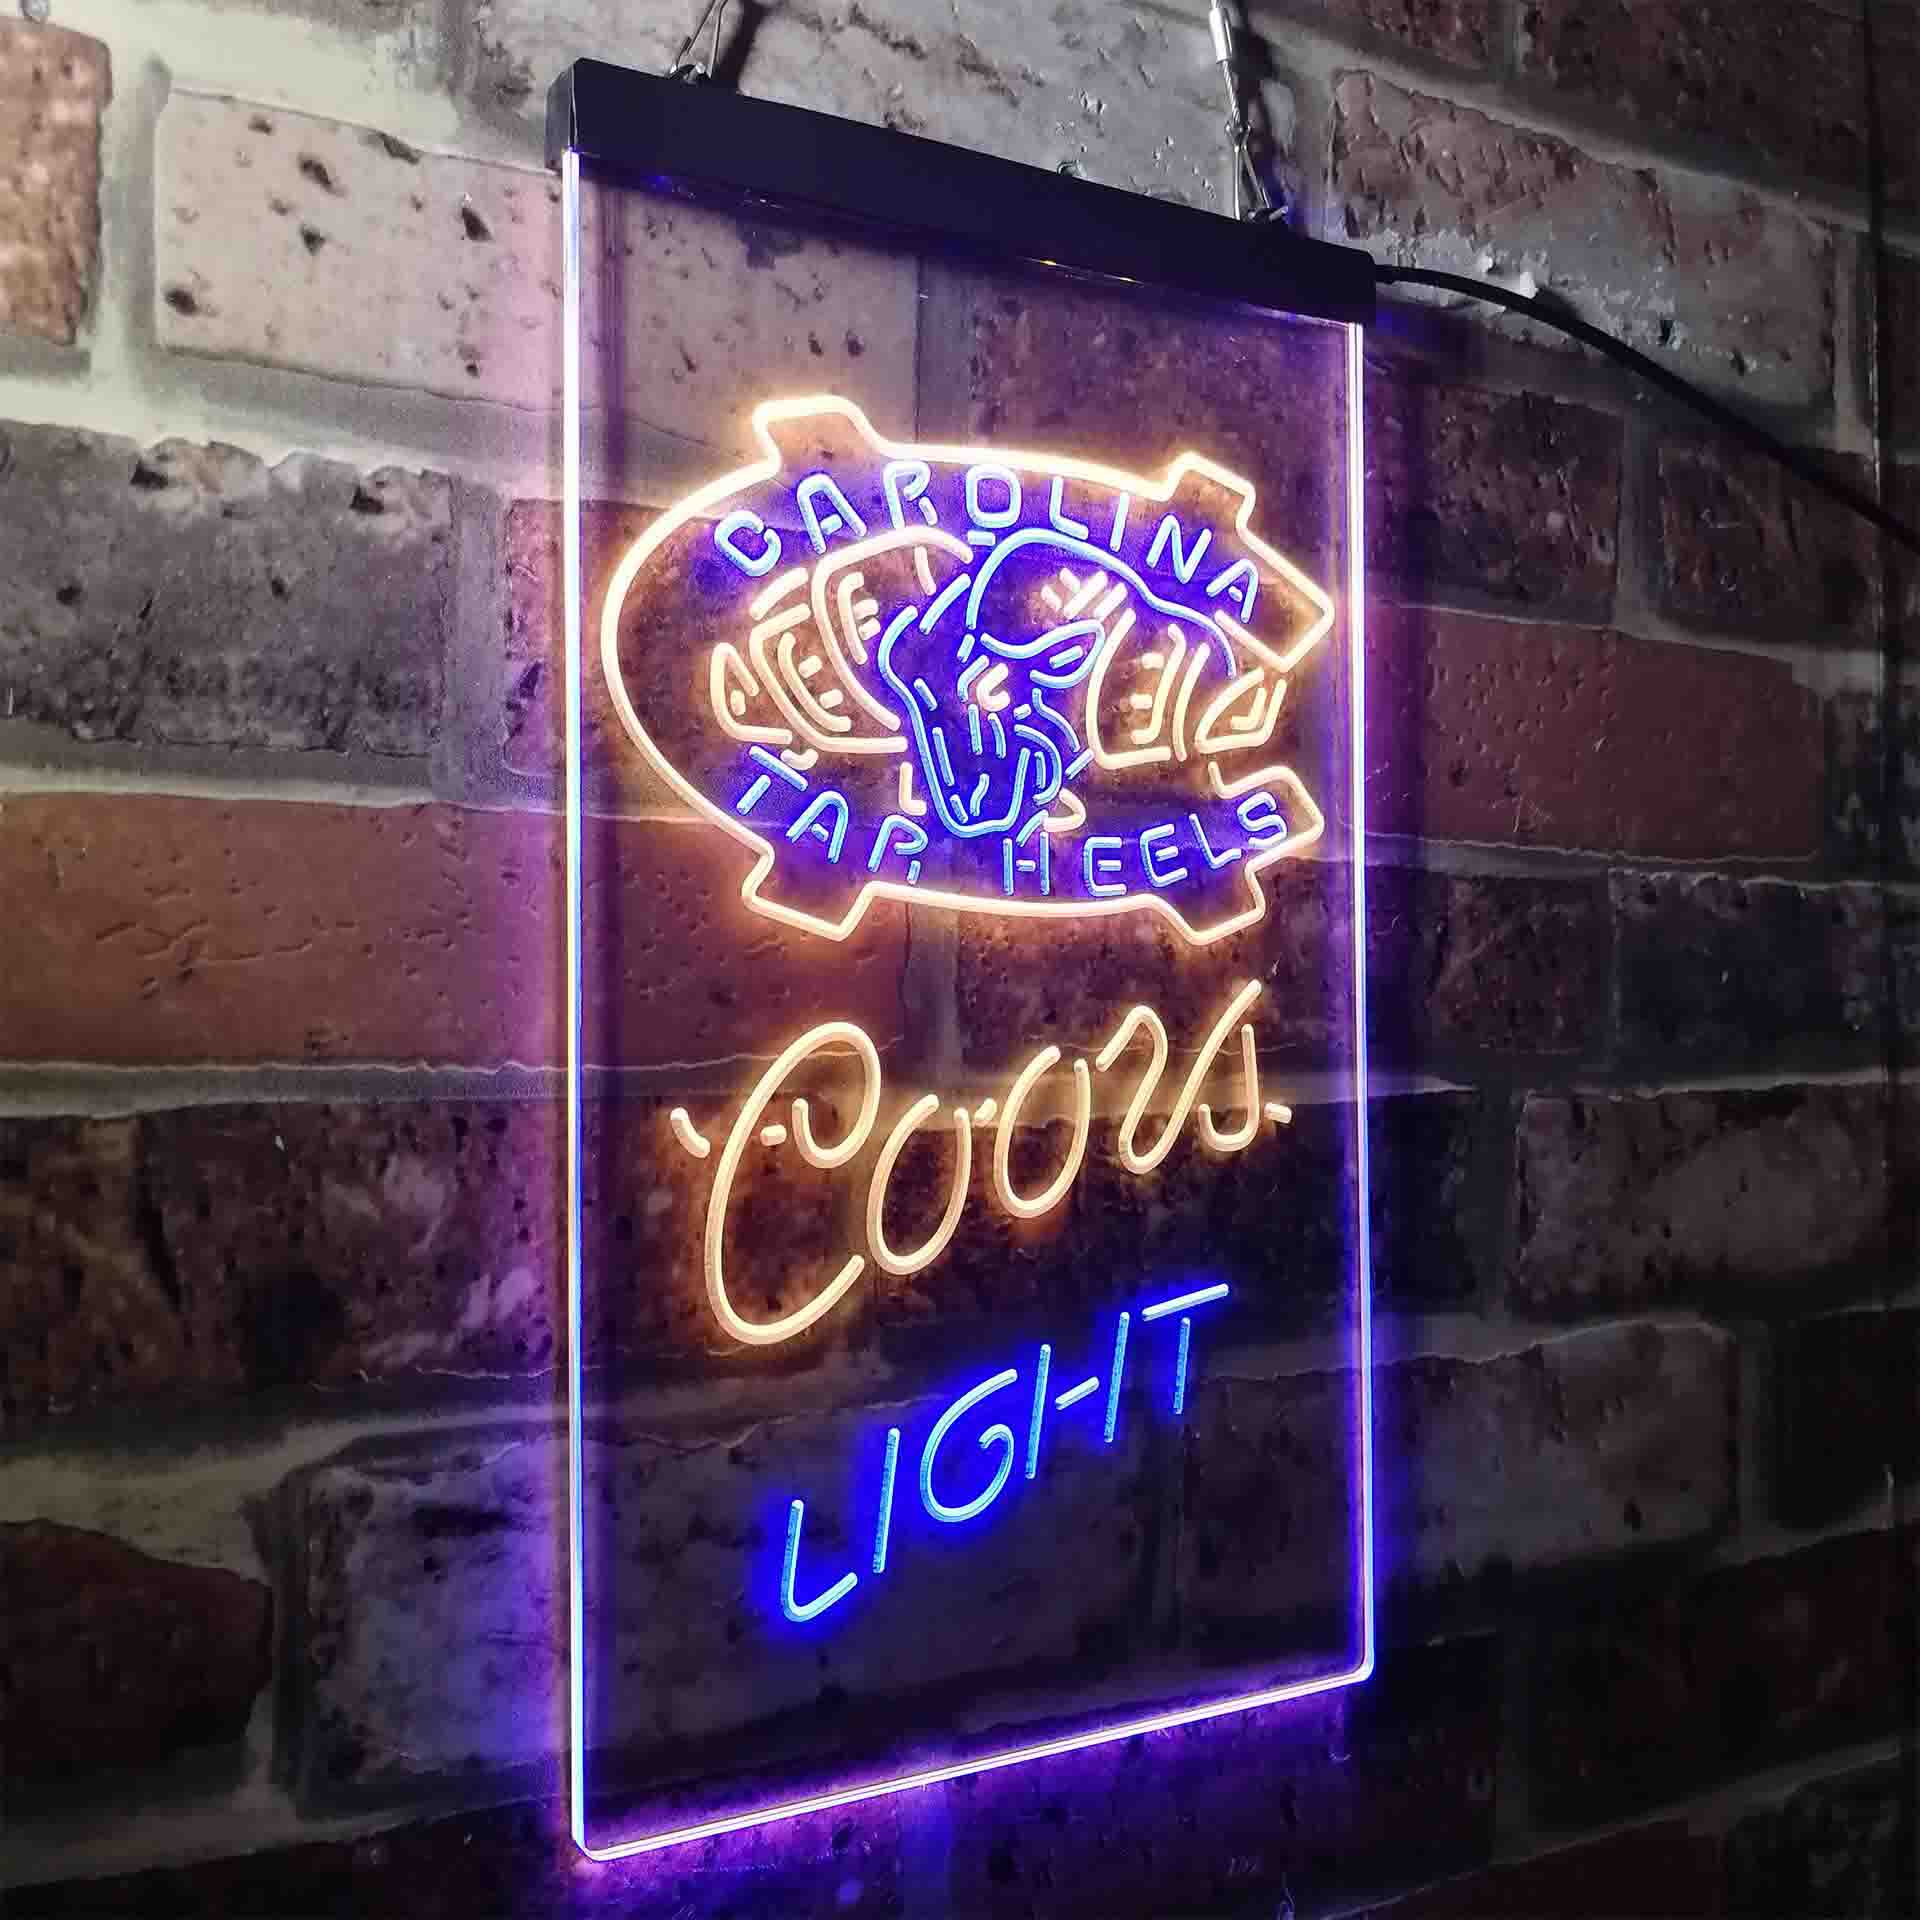 North Carolina Tar Heels Coors Light LED Neon Sign